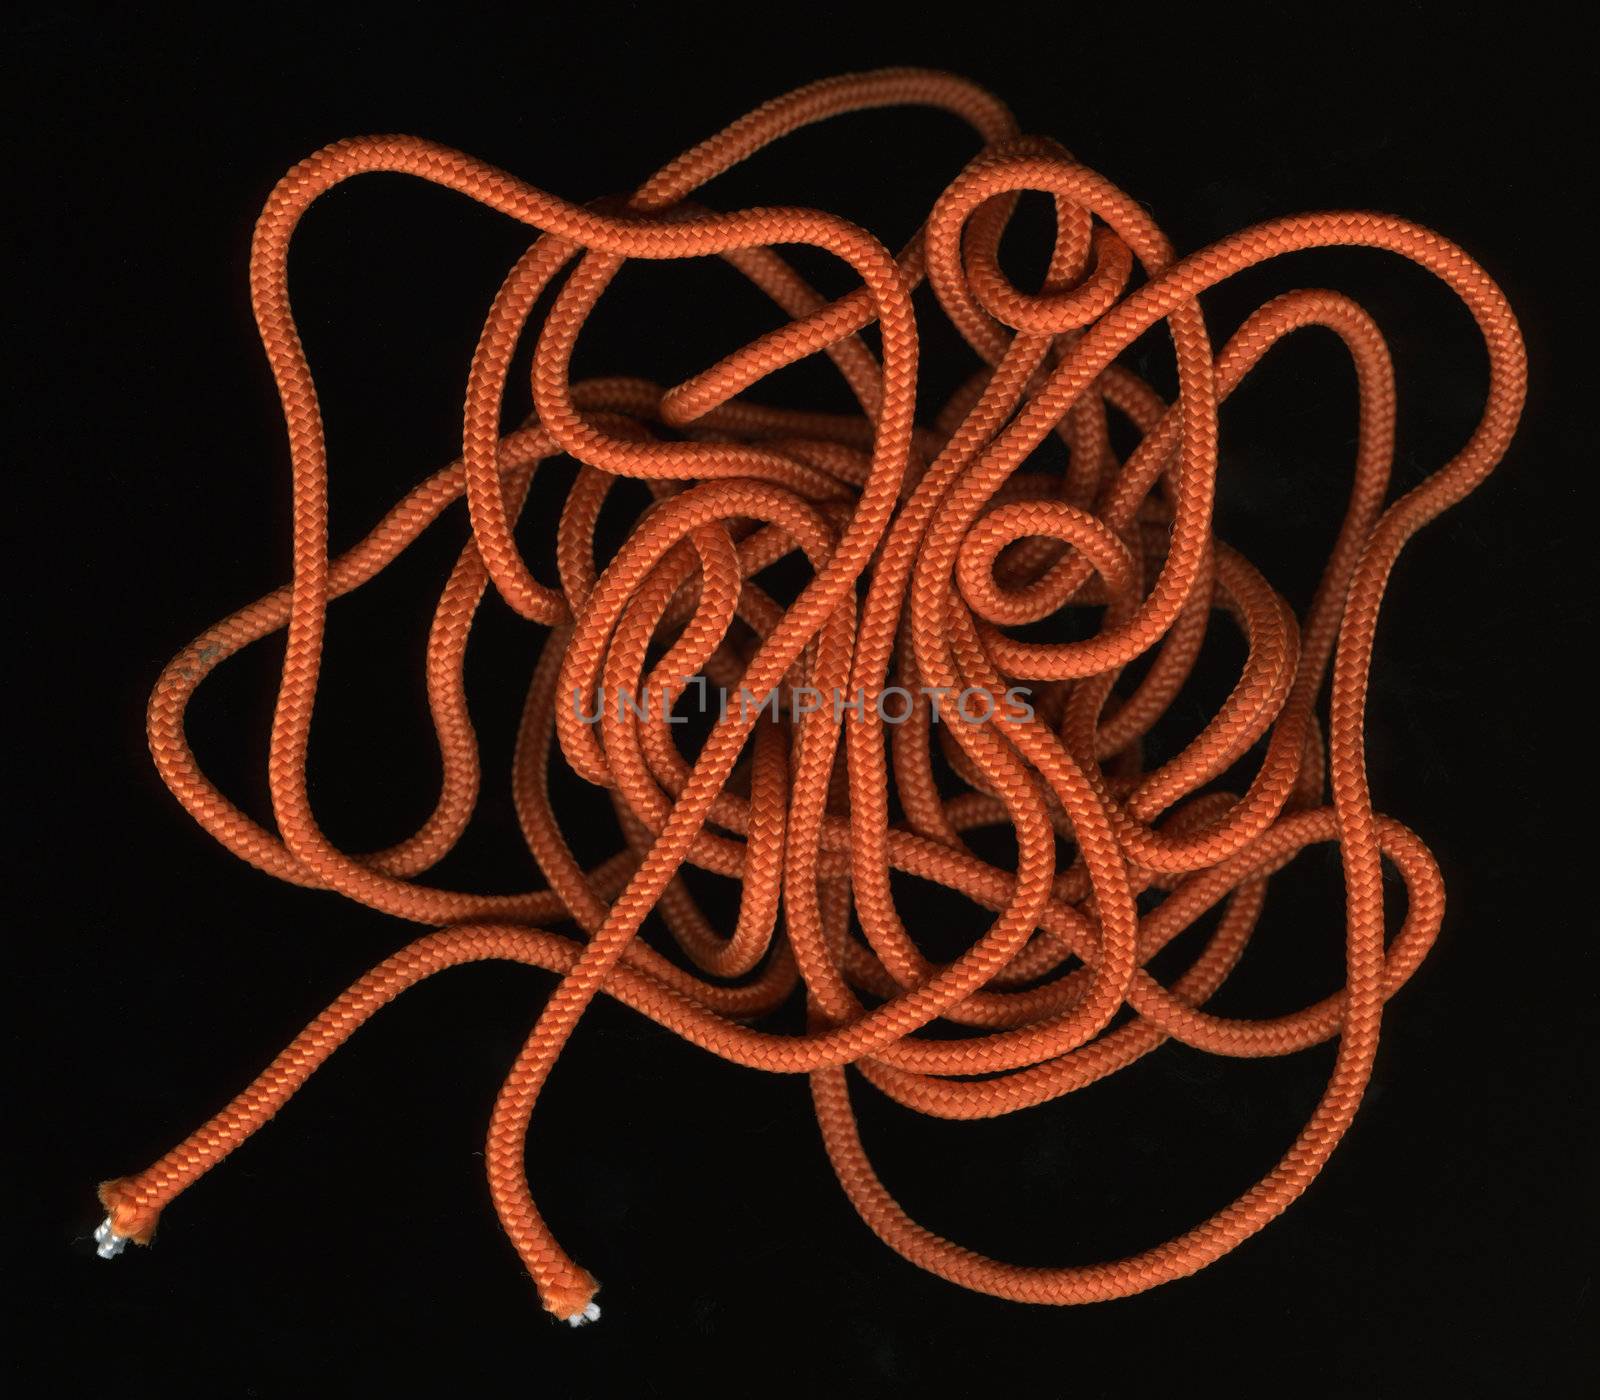 loose, random coils of orange, nylon cord against black background